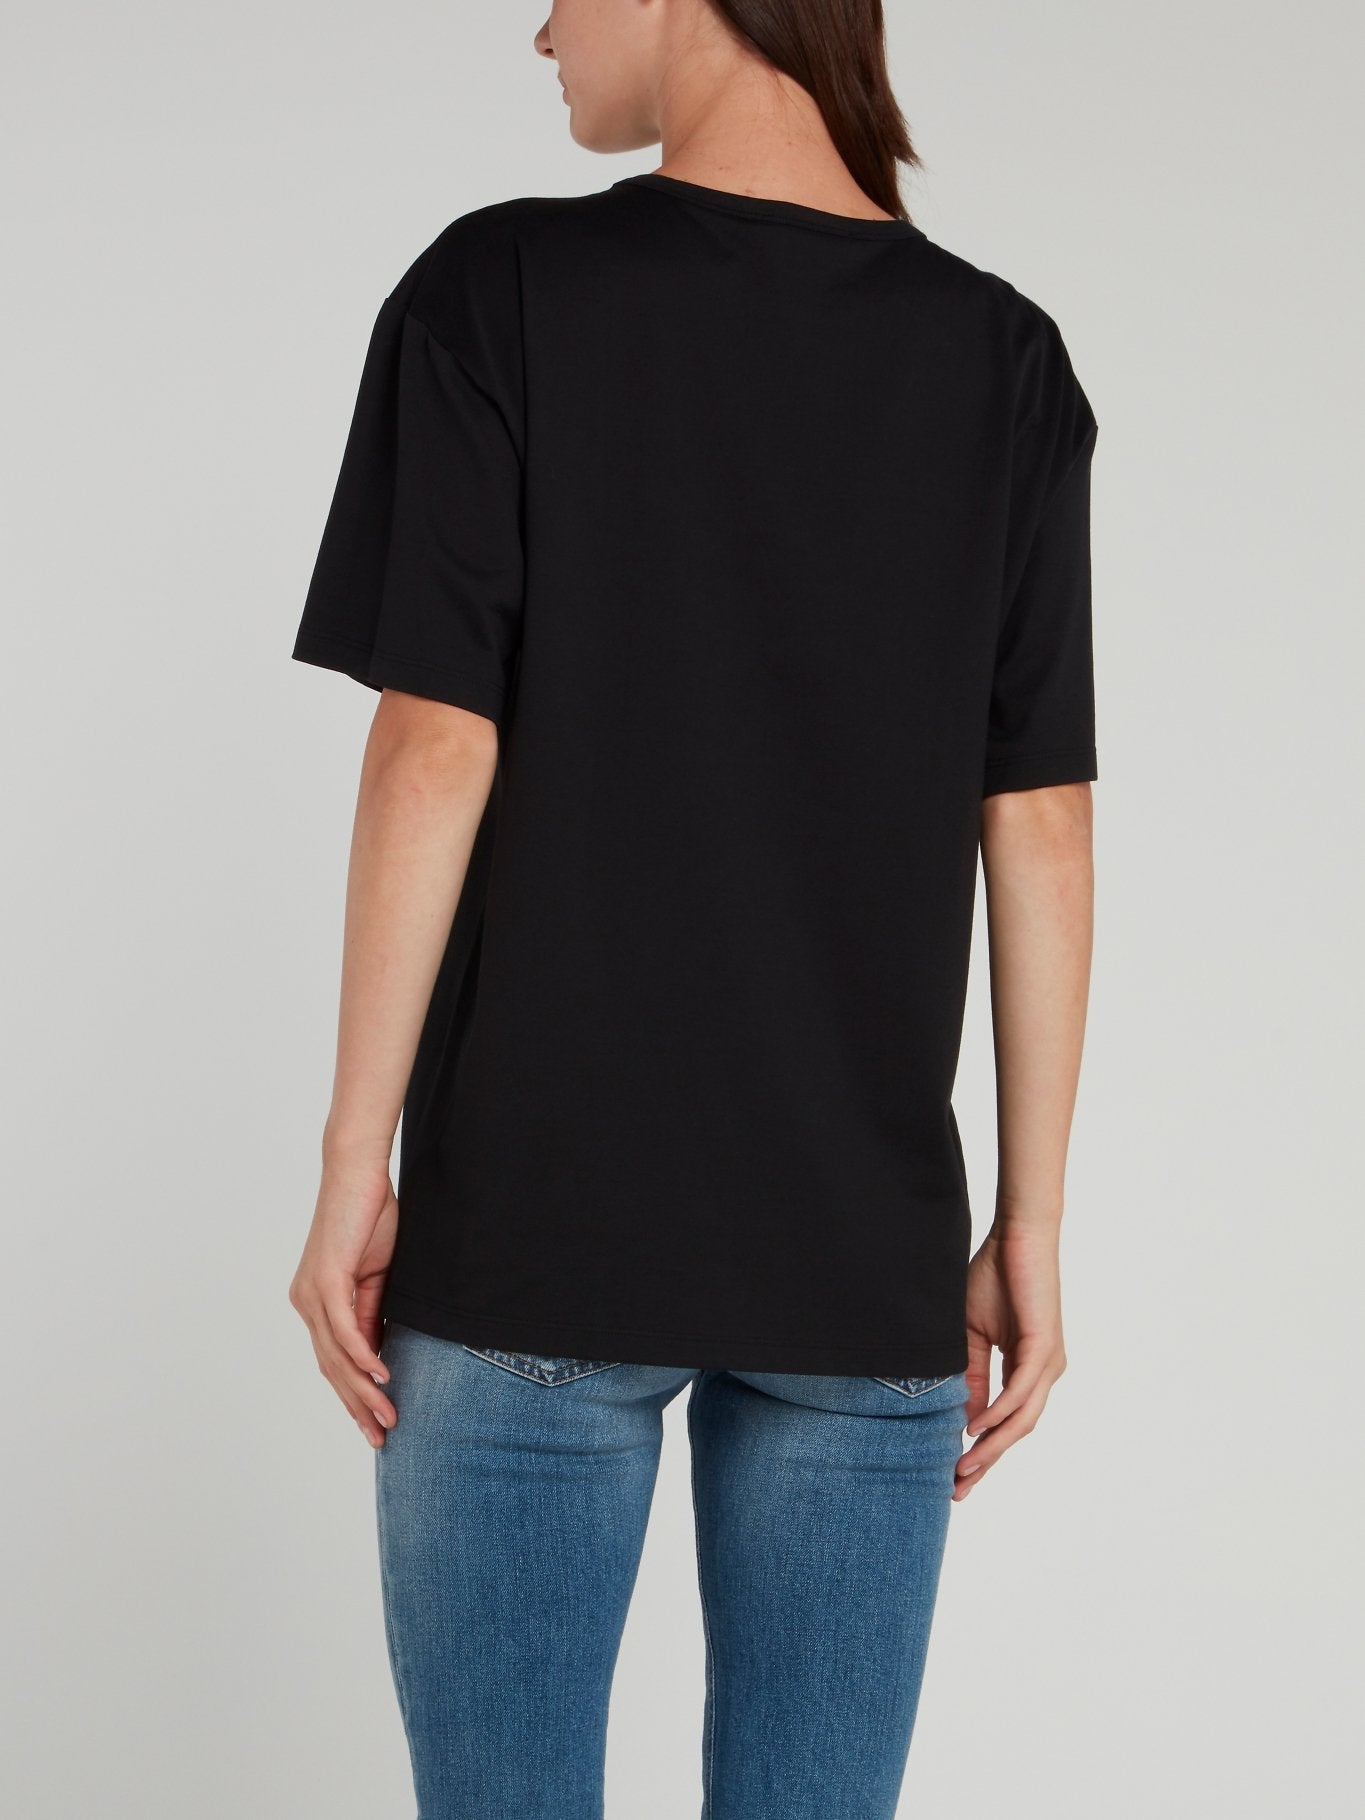 Shop Roberto Cavalli Maison-B-More – Baroque Online Global Print Store T-Shirt Black